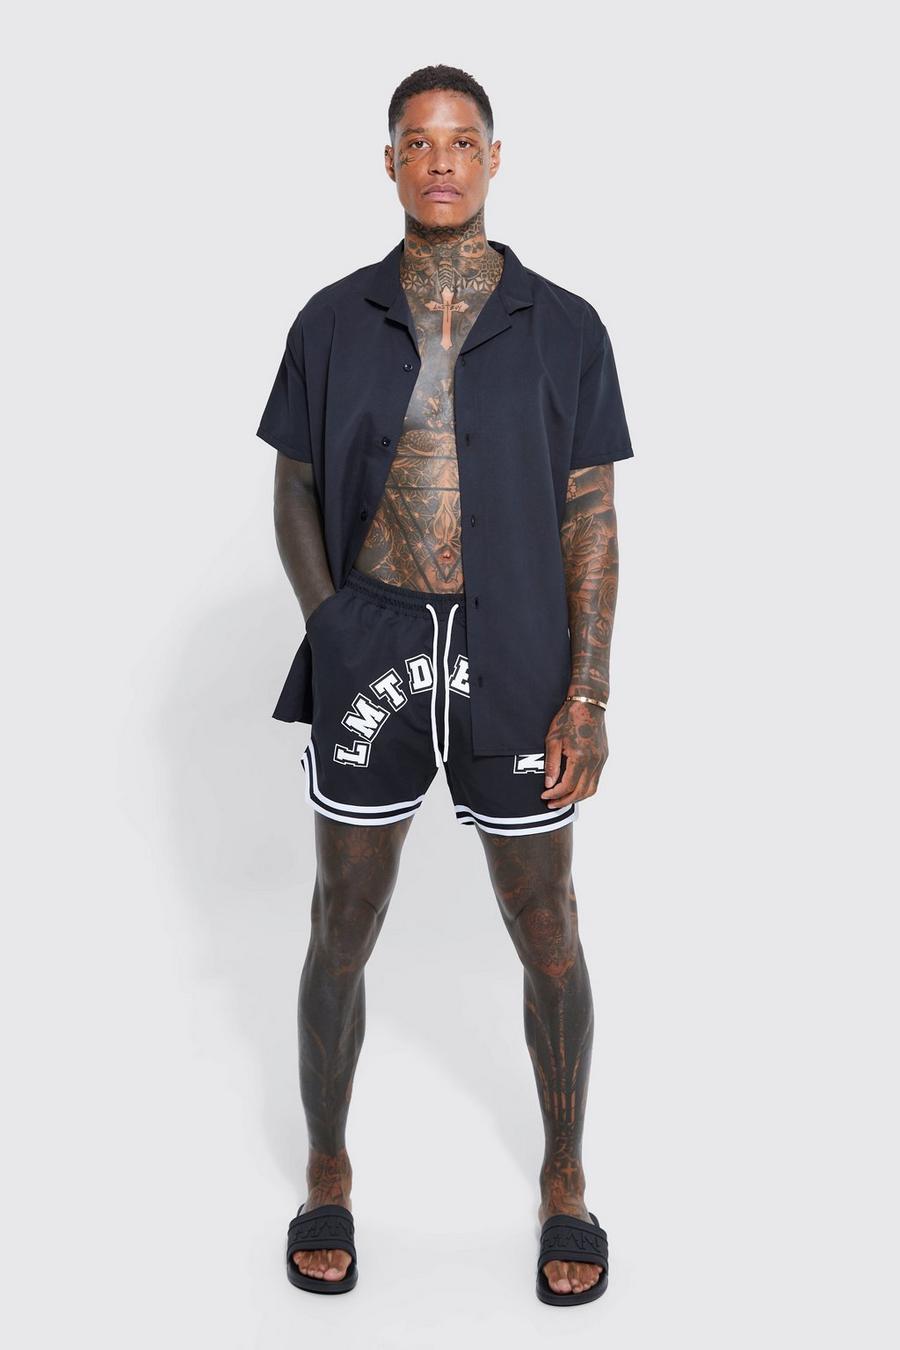 Black Short Sleeve Lmtd Shirt And Swim Set